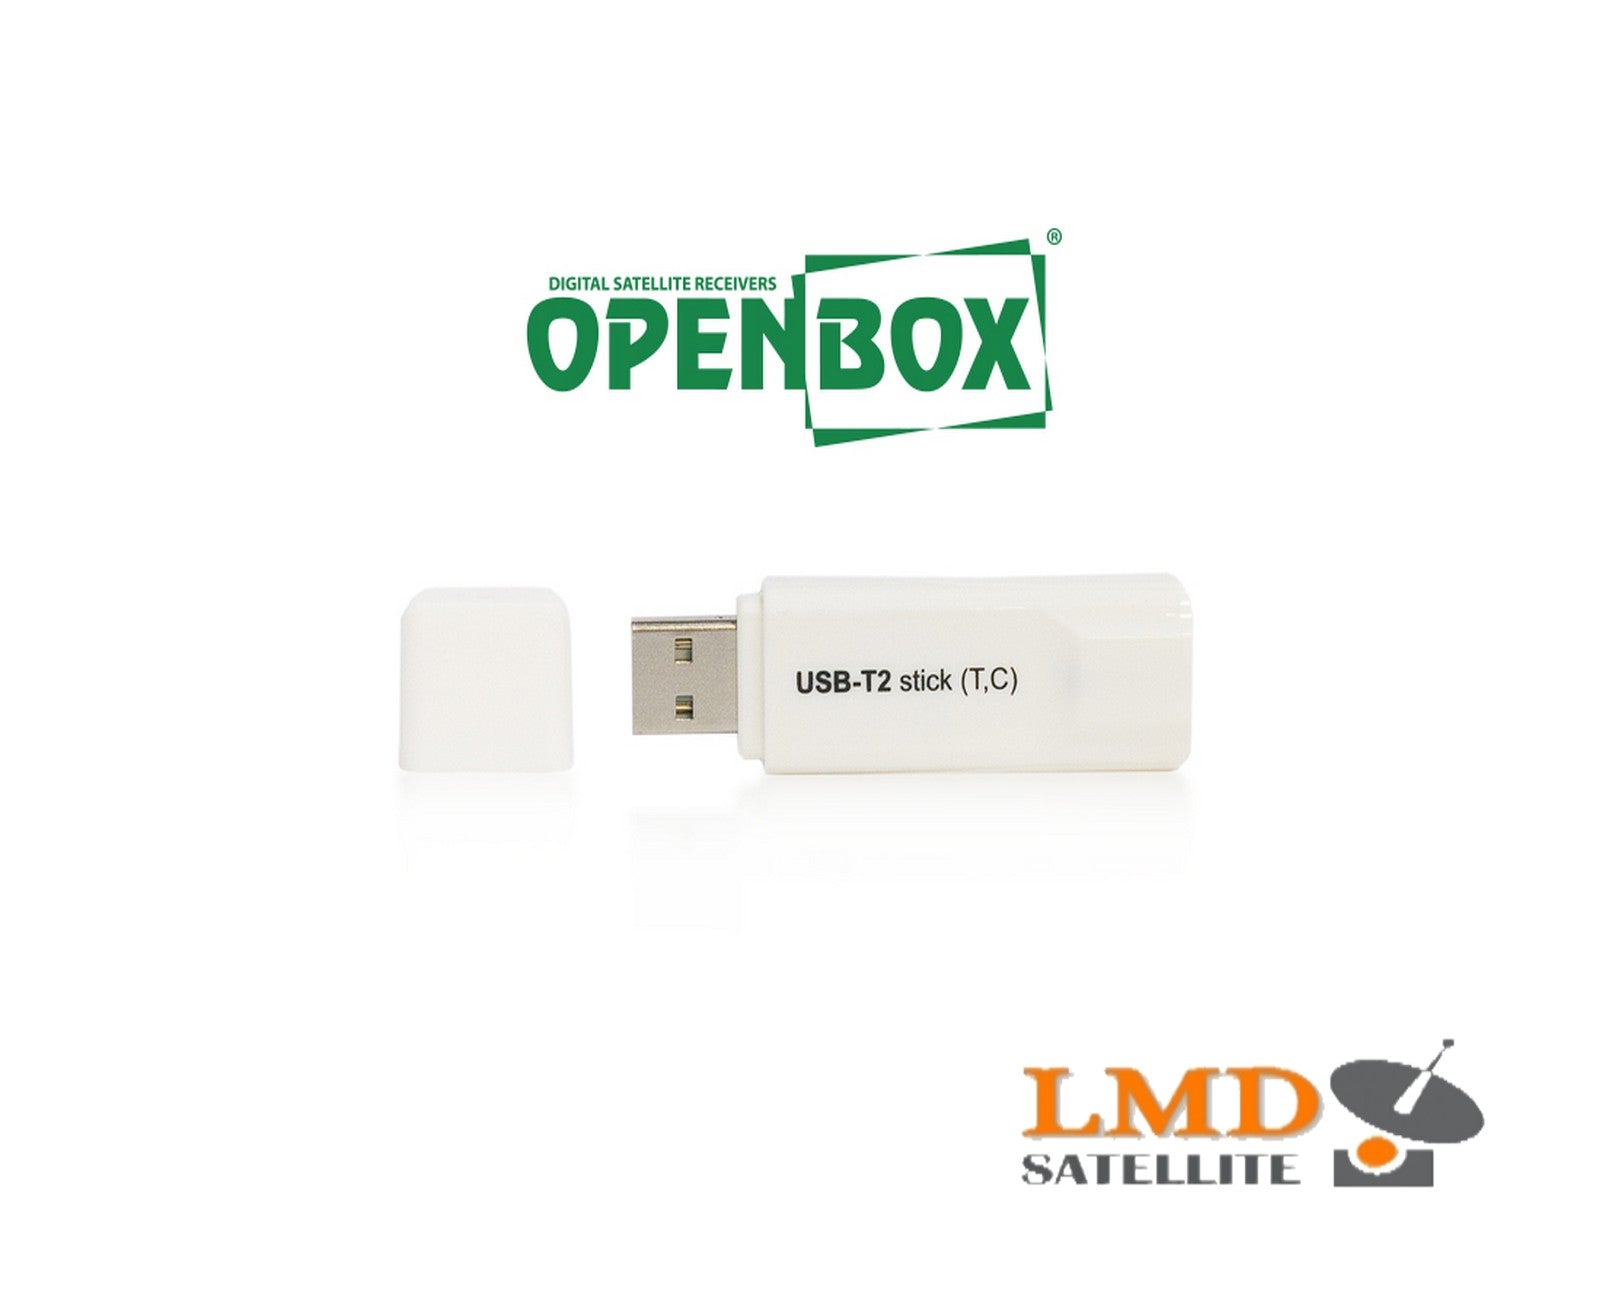 Openbox USB Tuner DVB-T2/C Stick Formuler, Openbox